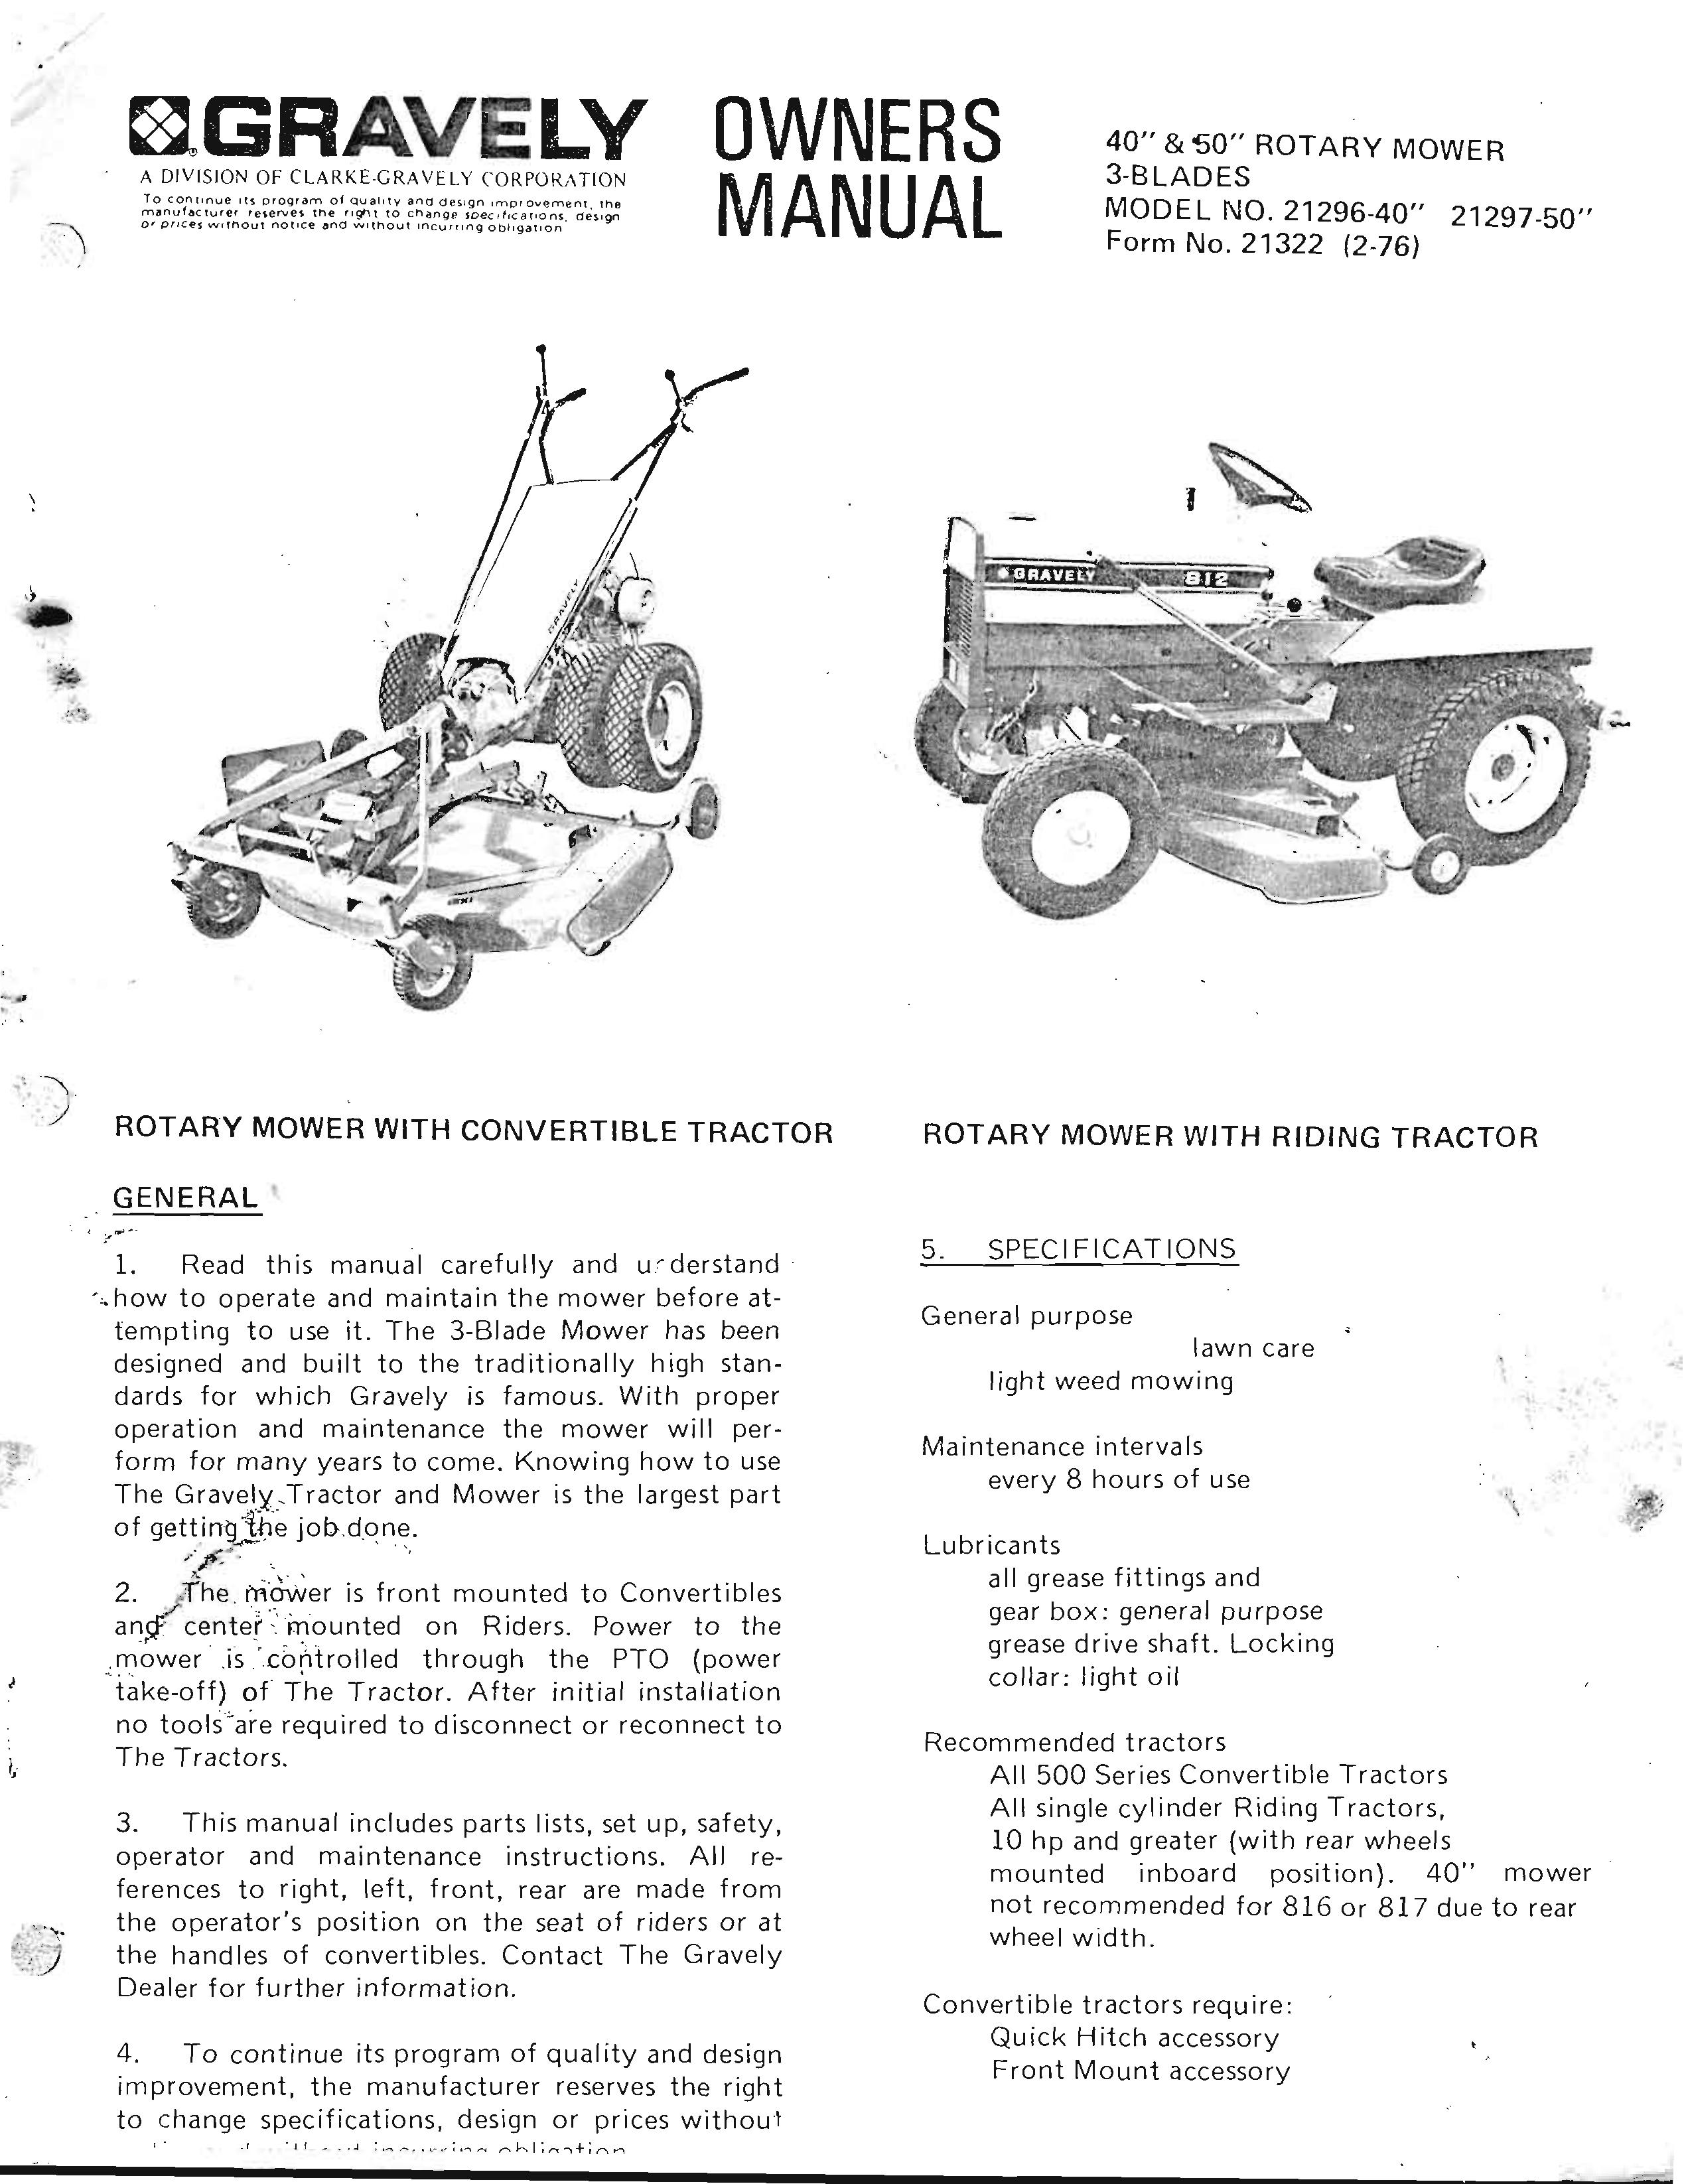 Gravely 21296-50 Lawn Mower User Manual